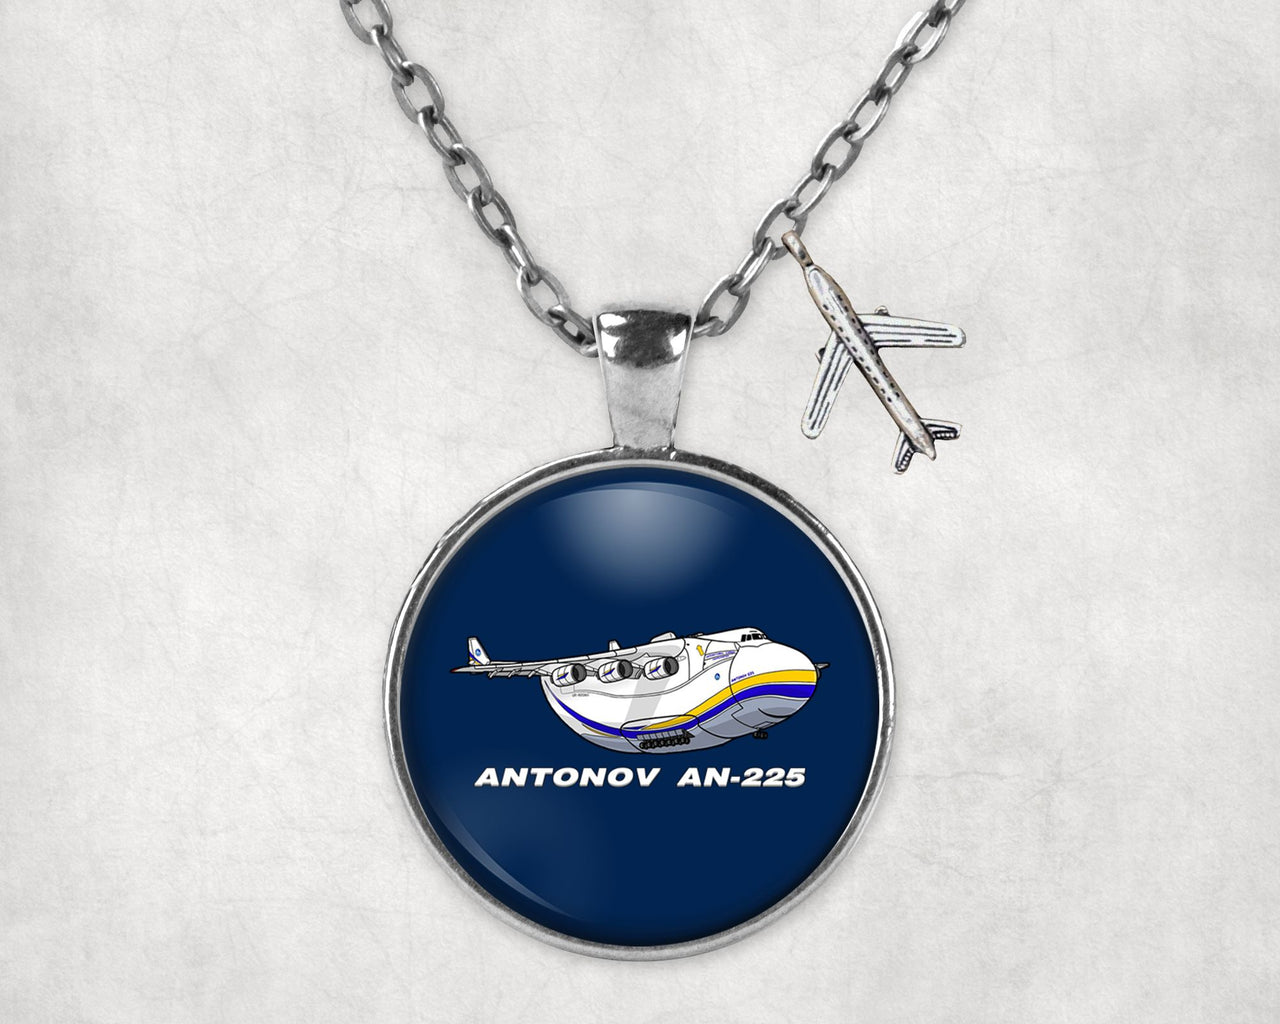 Antonov AN-225 (17) Designed Necklaces